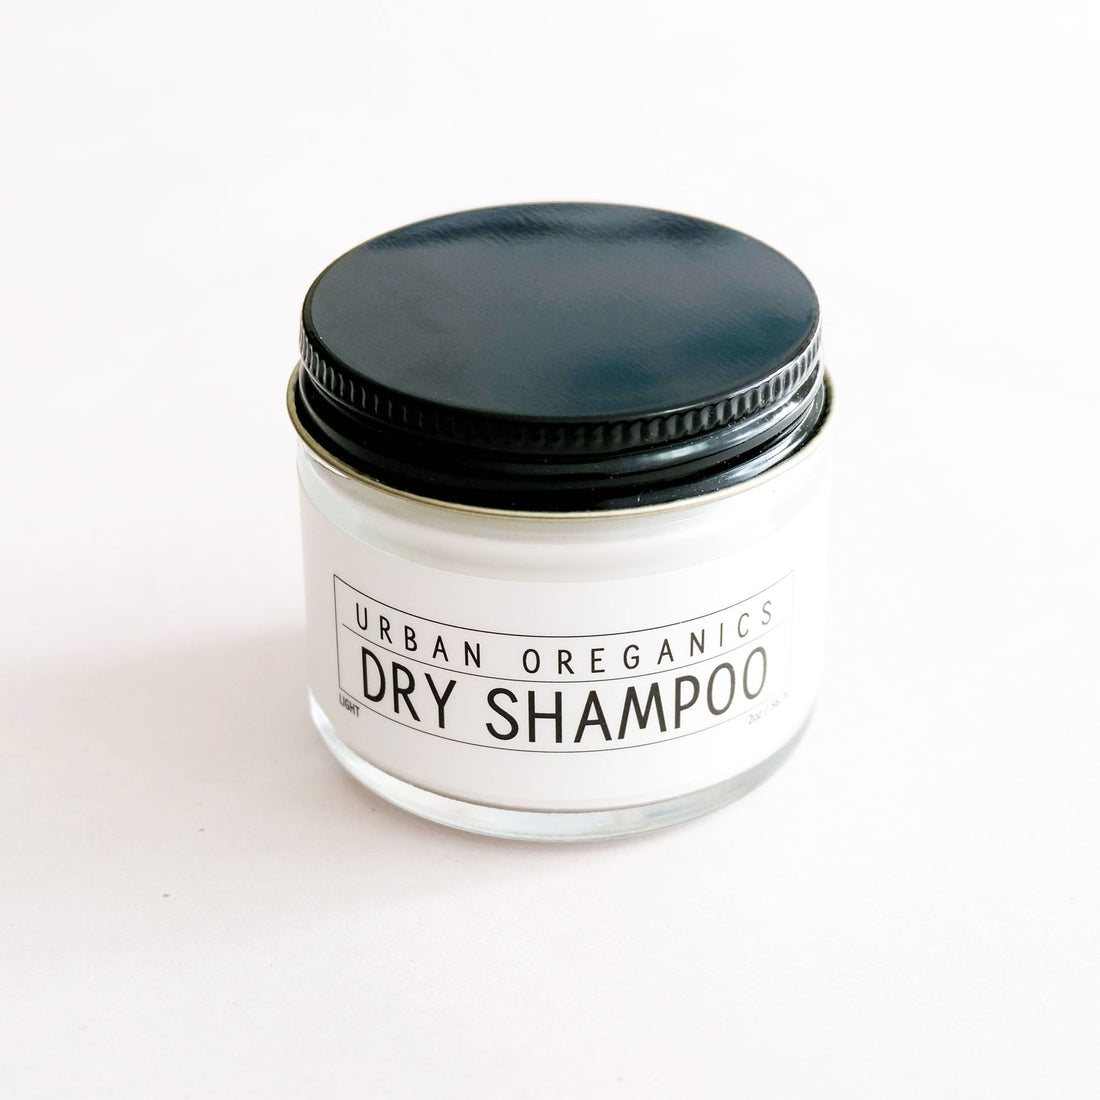 dry shampoo powder for light hair